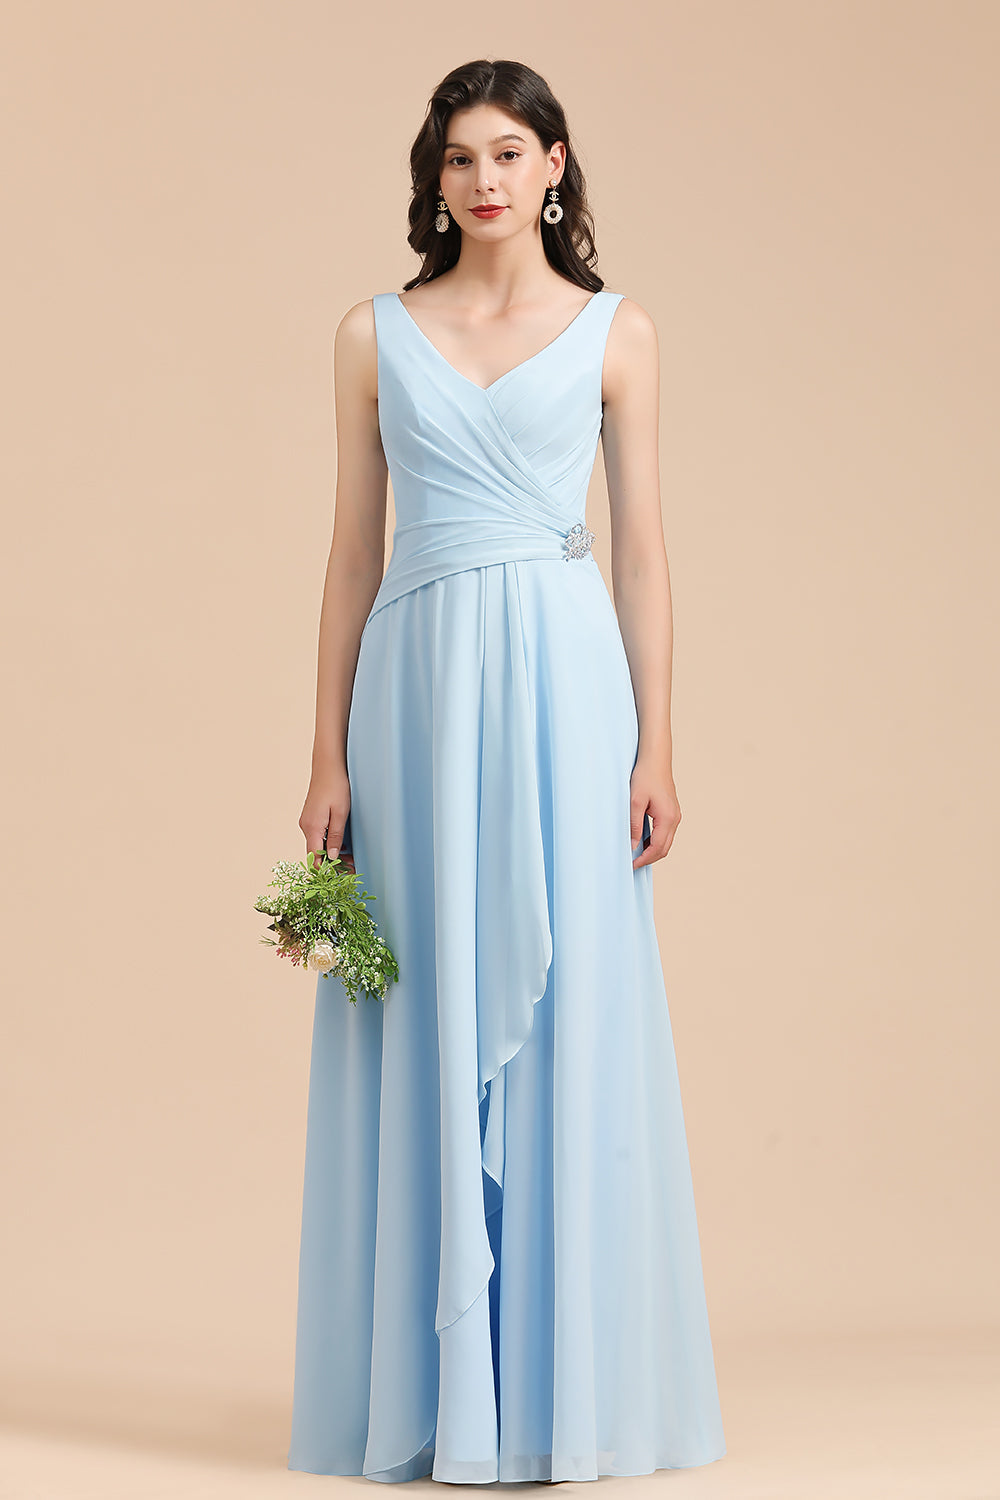 Sky Blue Chiffon Long Bridesmaid Dress Ruched